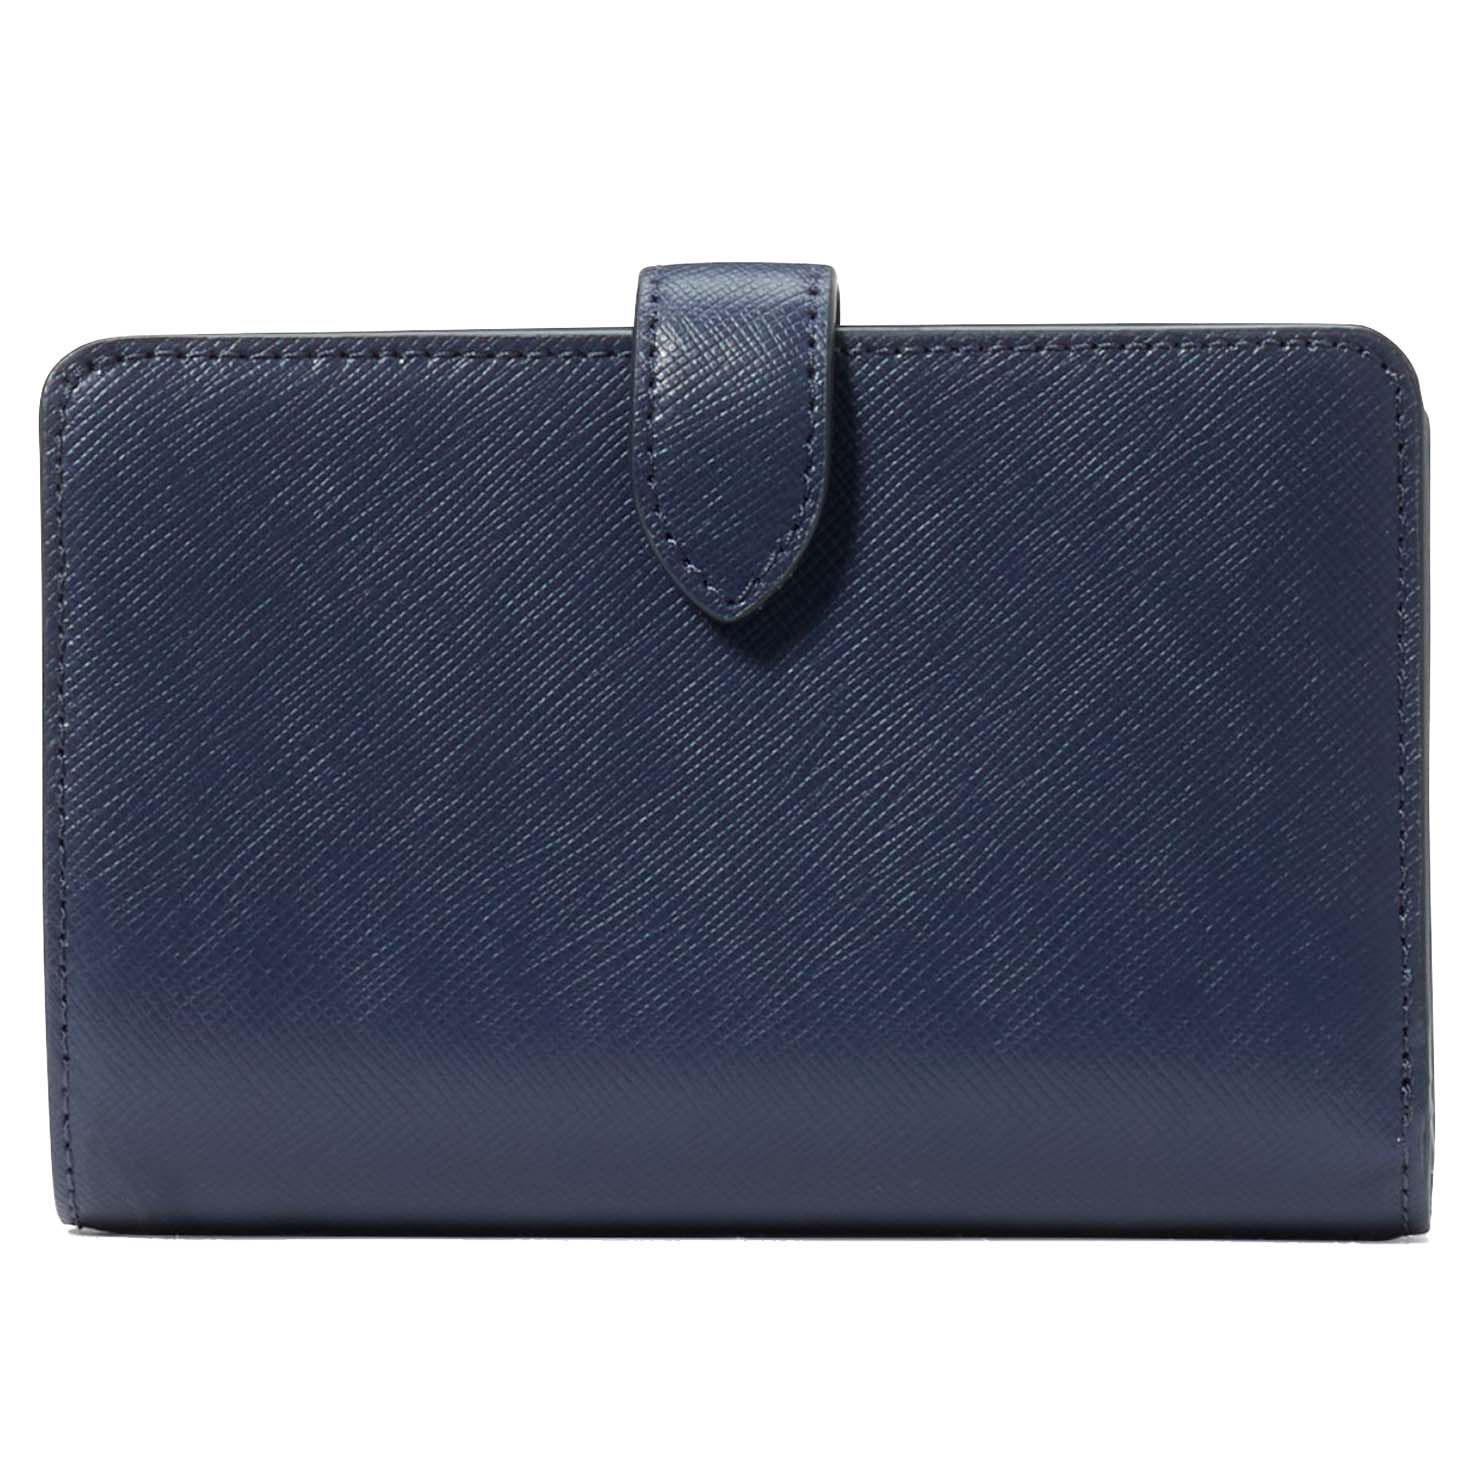 Kate Spade Medium Wallet Madison Saffiano Leather Compact Bifold Parisian Navy Dark Blue # KC580